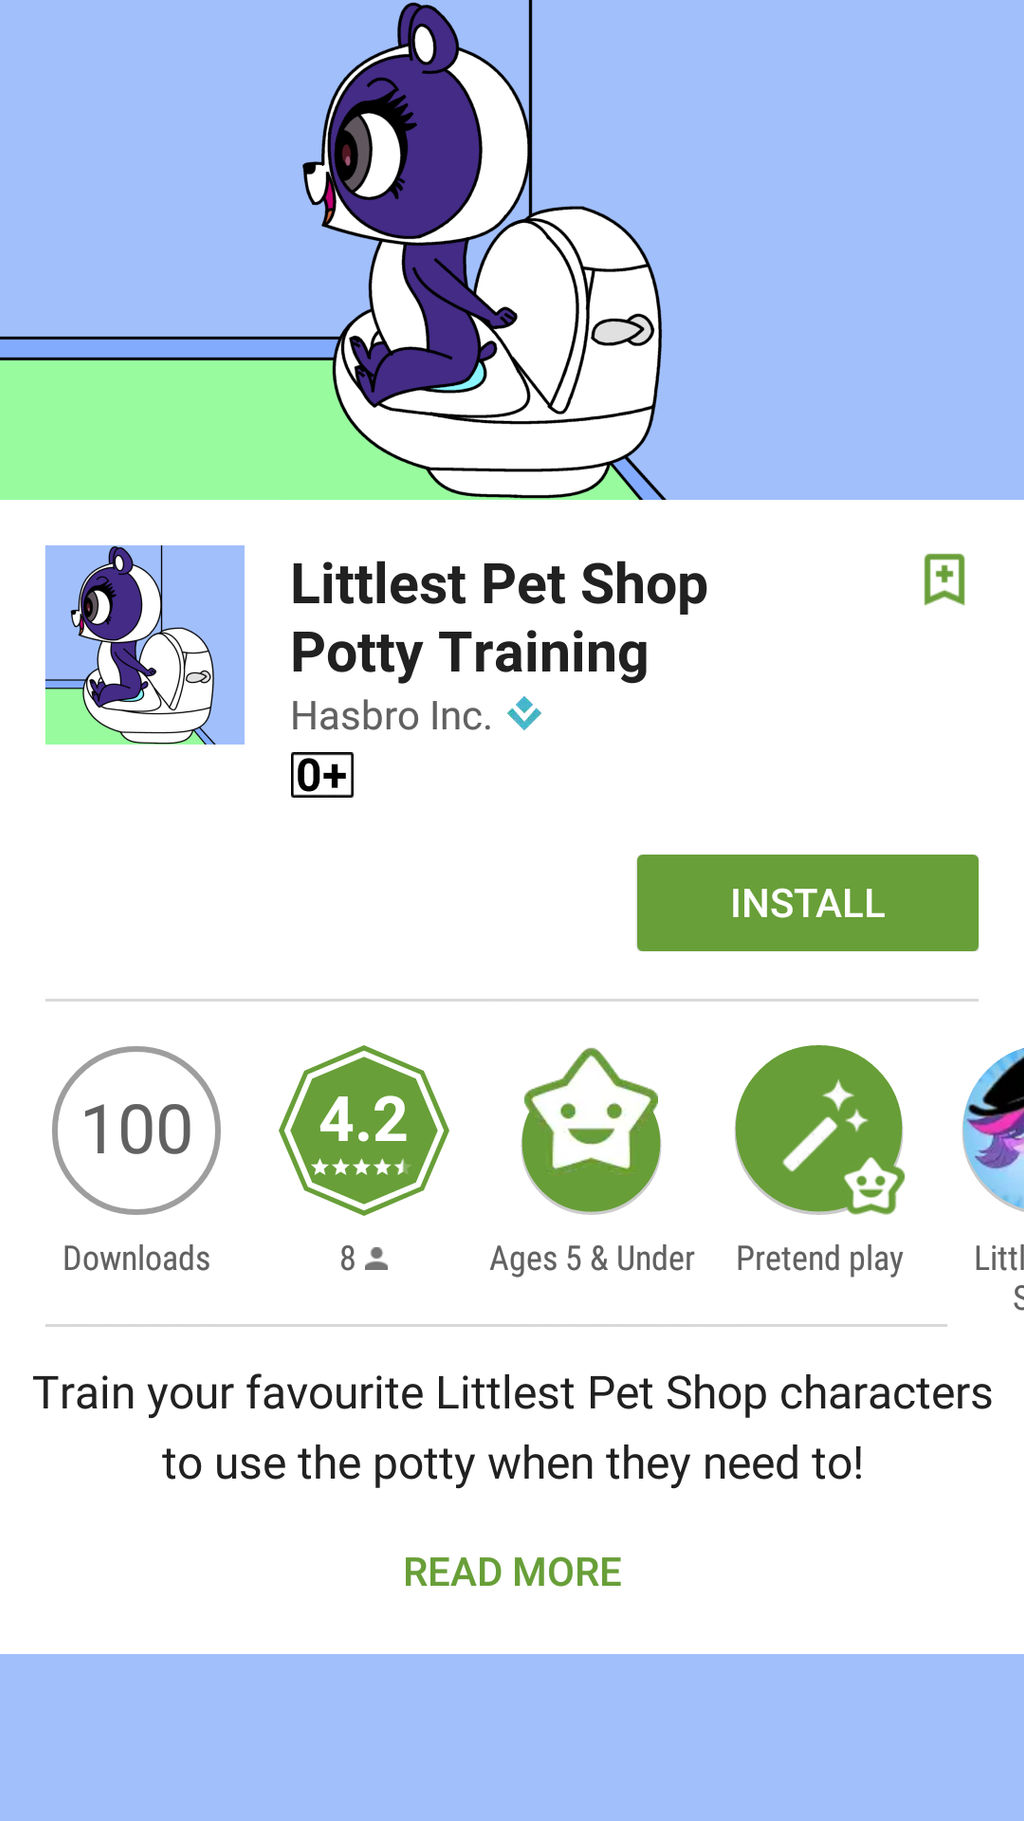 Littlest Pet Shop Potty Training app by dev-catscratch on DeviantArt